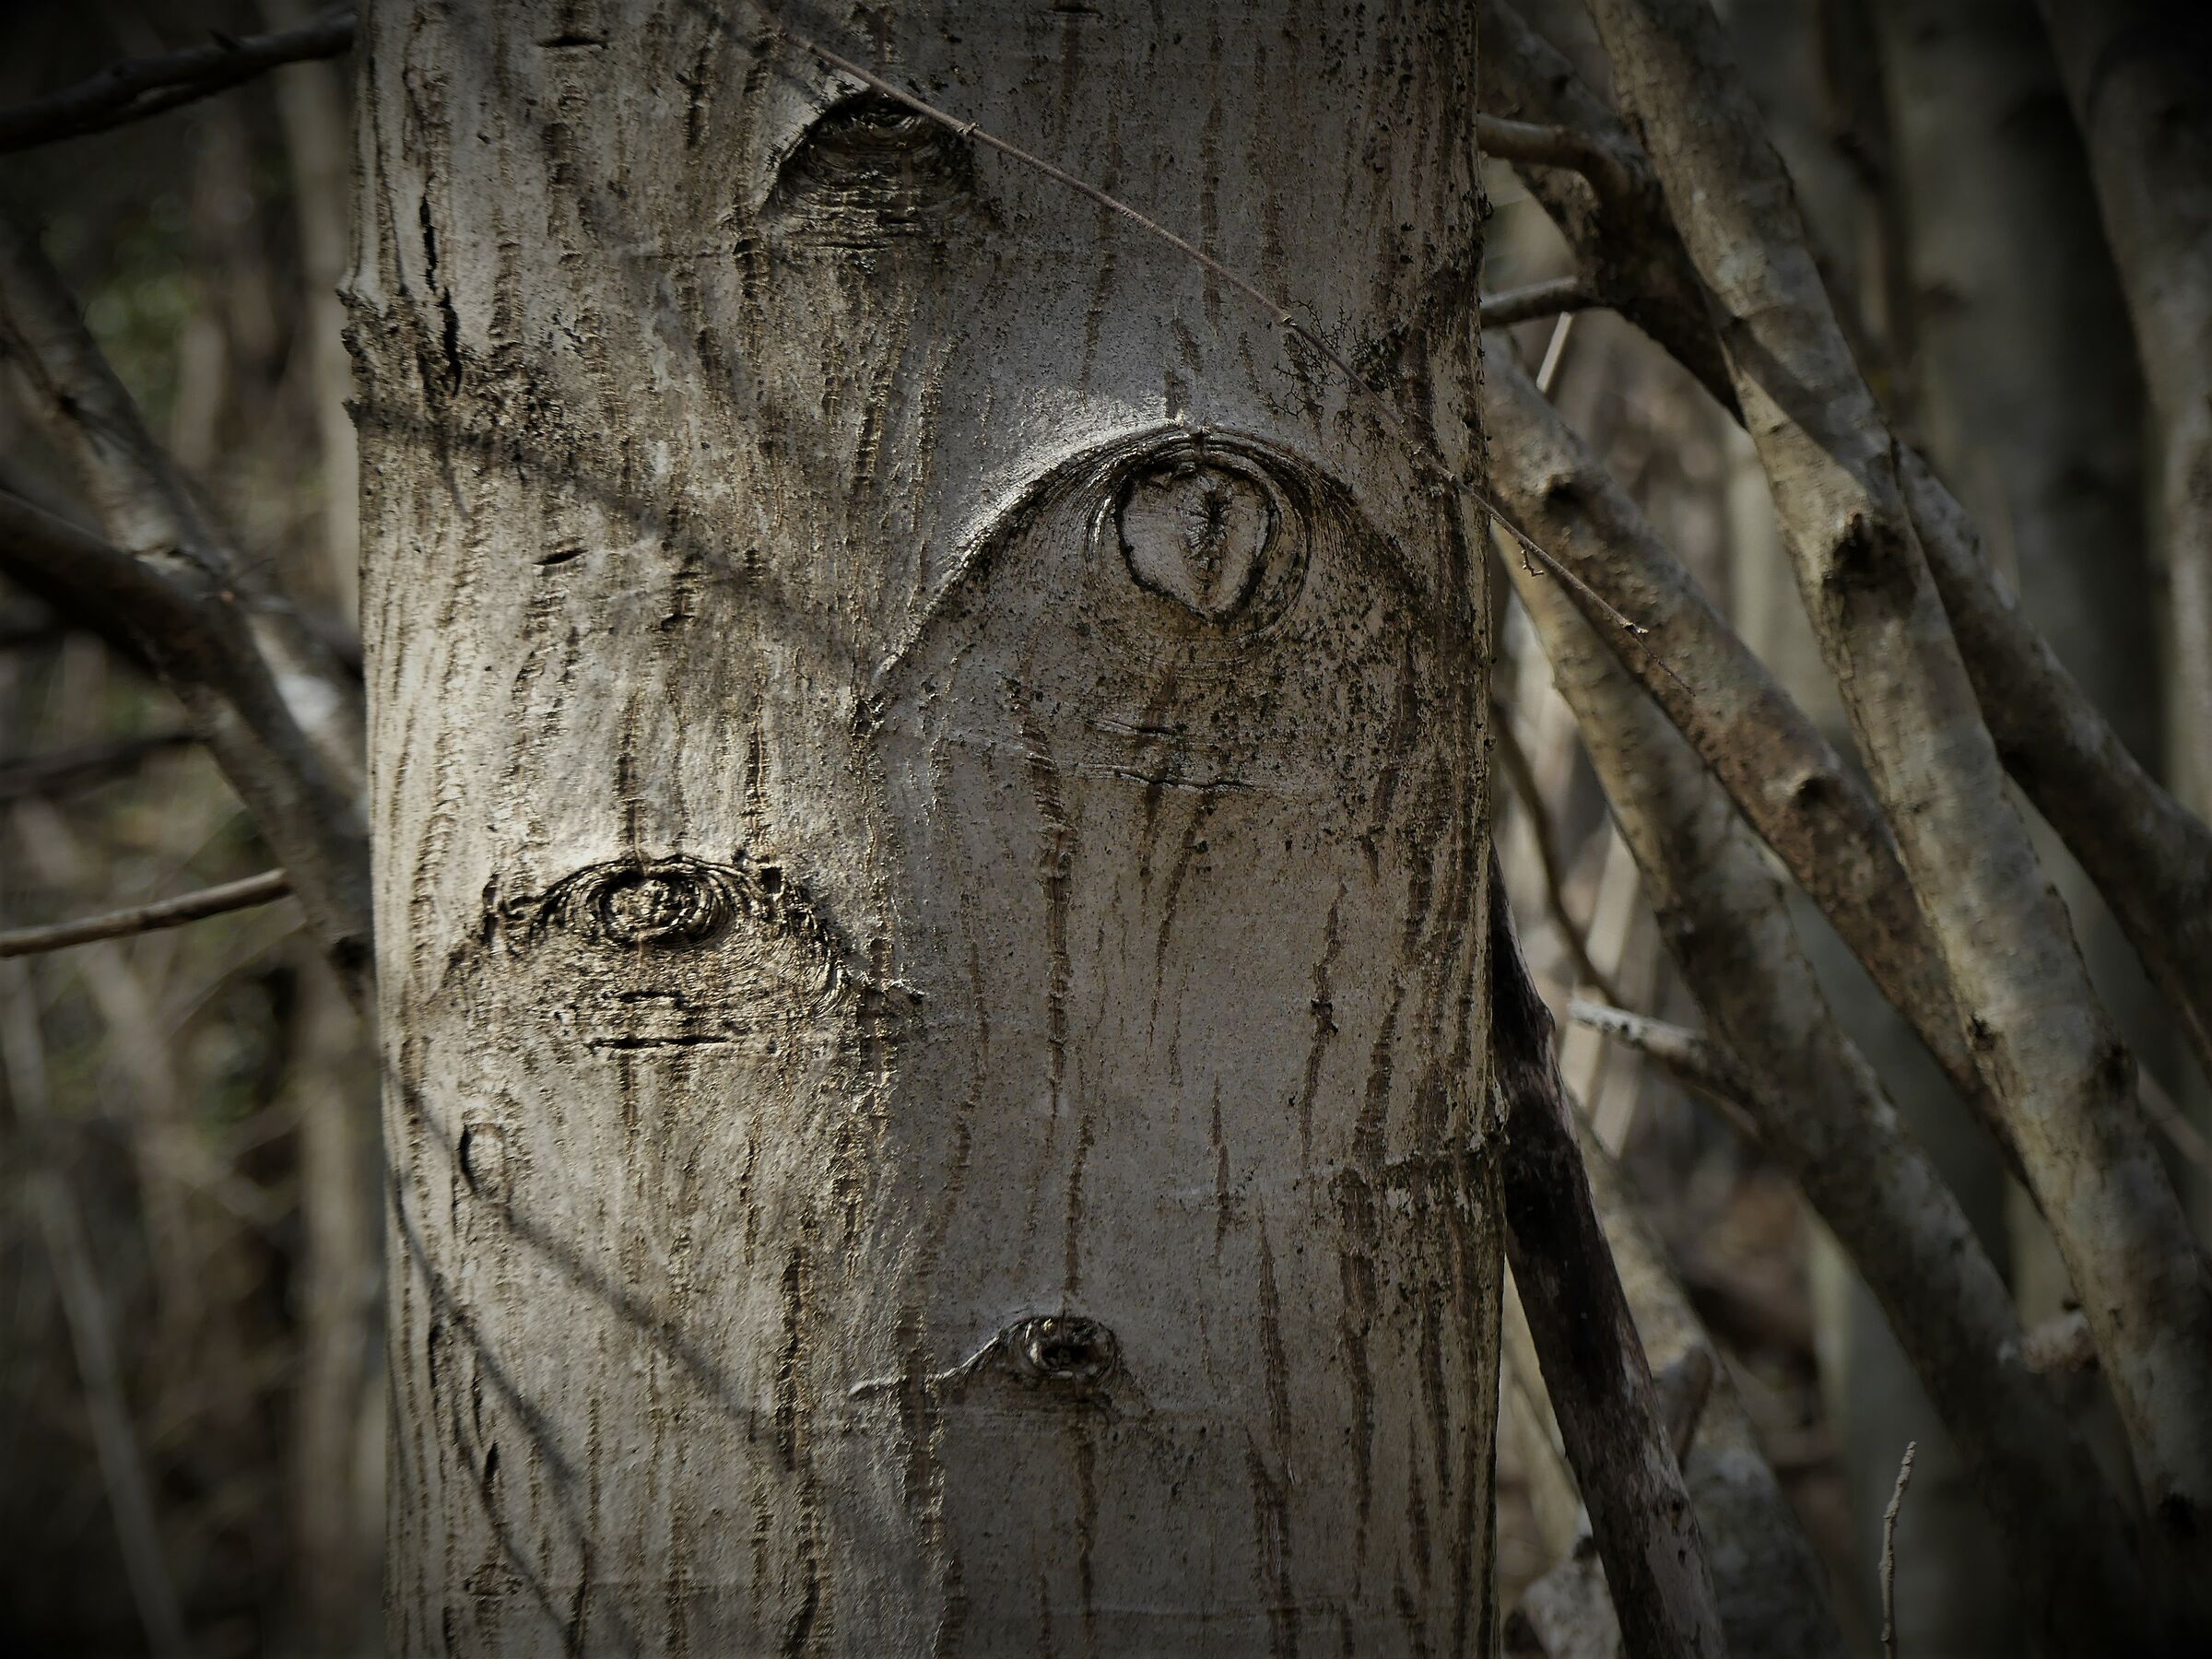 Tree Eyes...